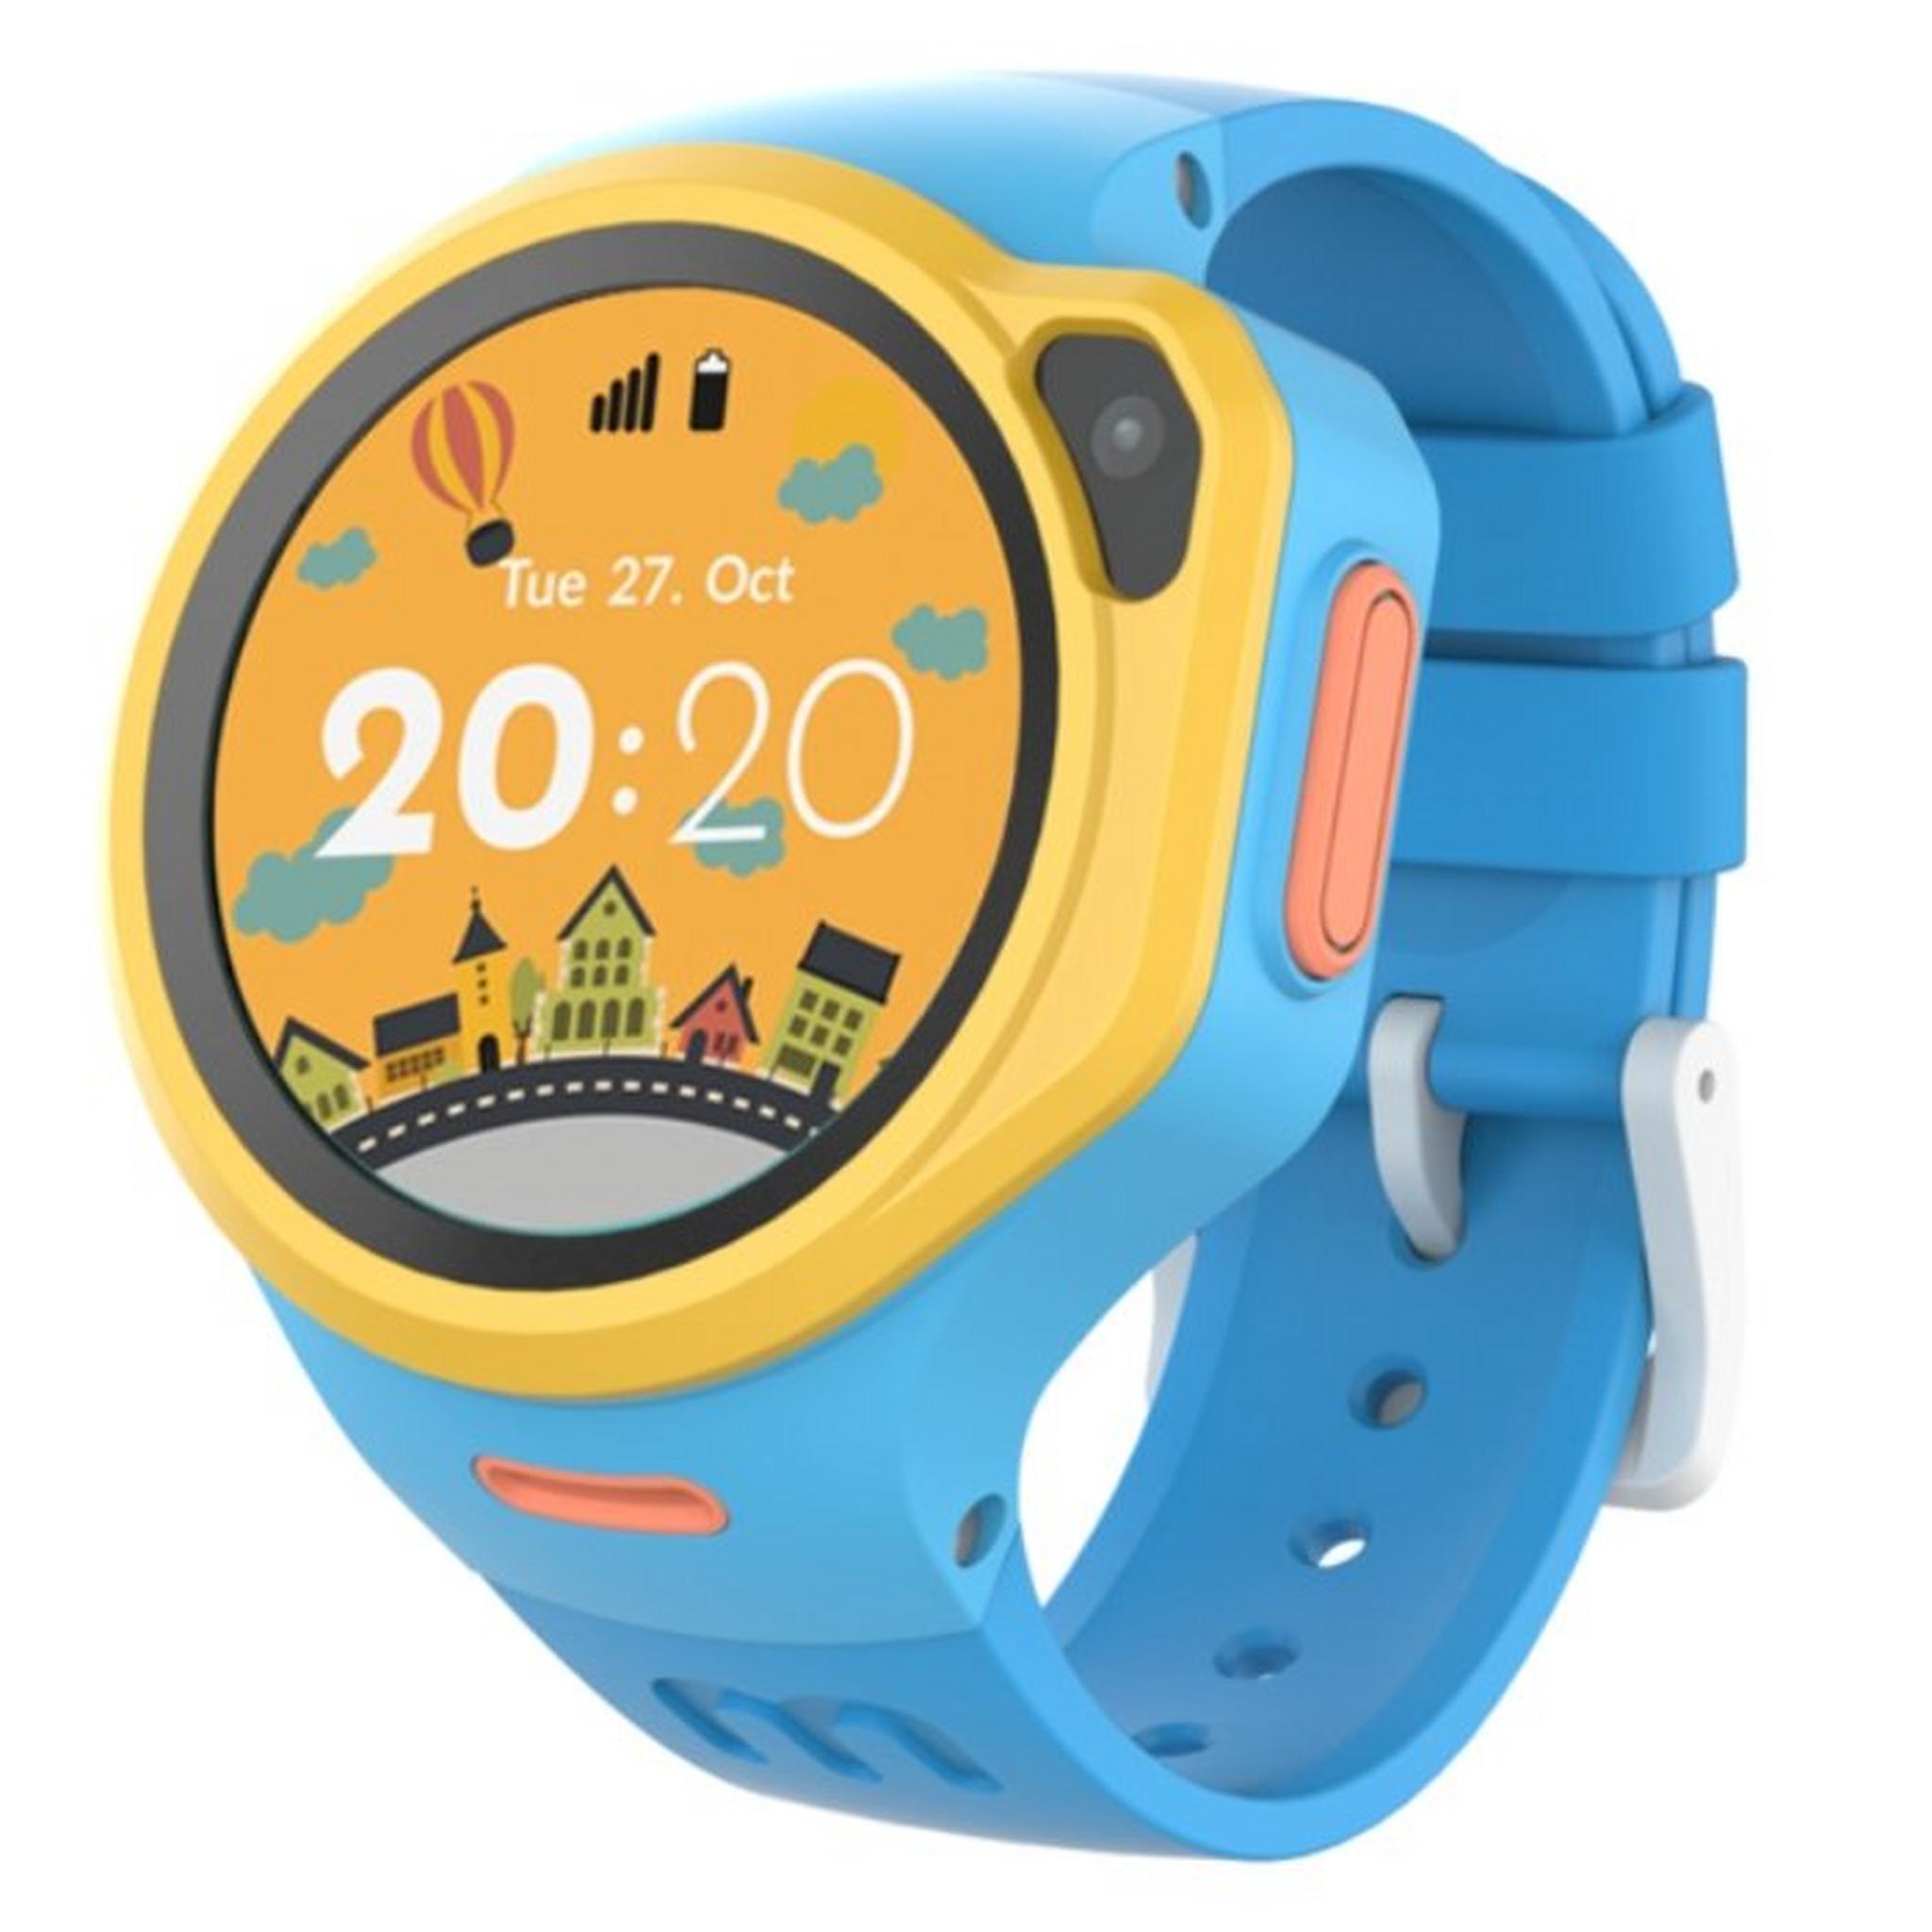 myFirst Kids Smart Watch - Blue